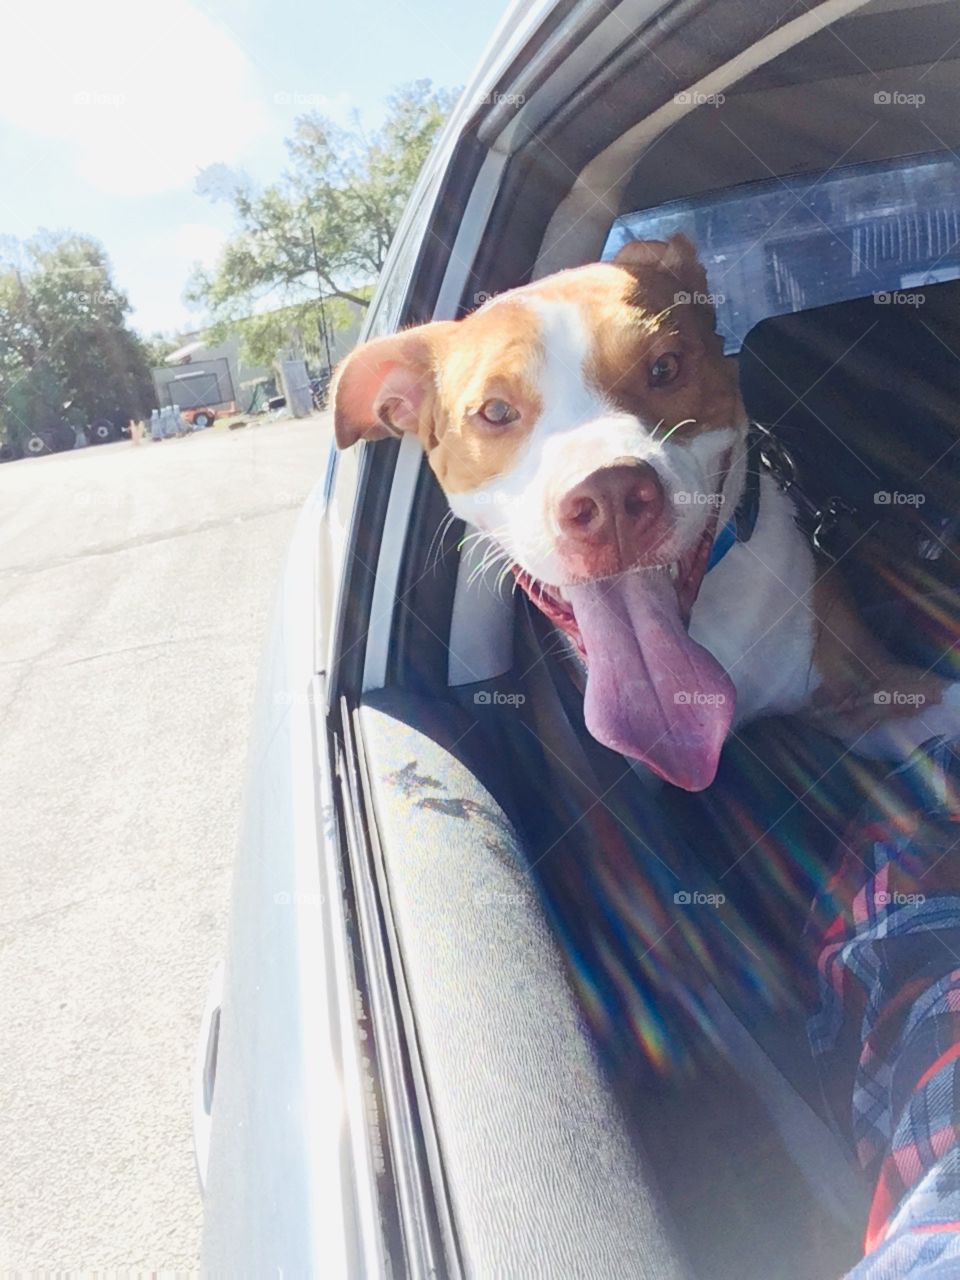 Beautiful rescue dog enjoying a car ride in Florida 